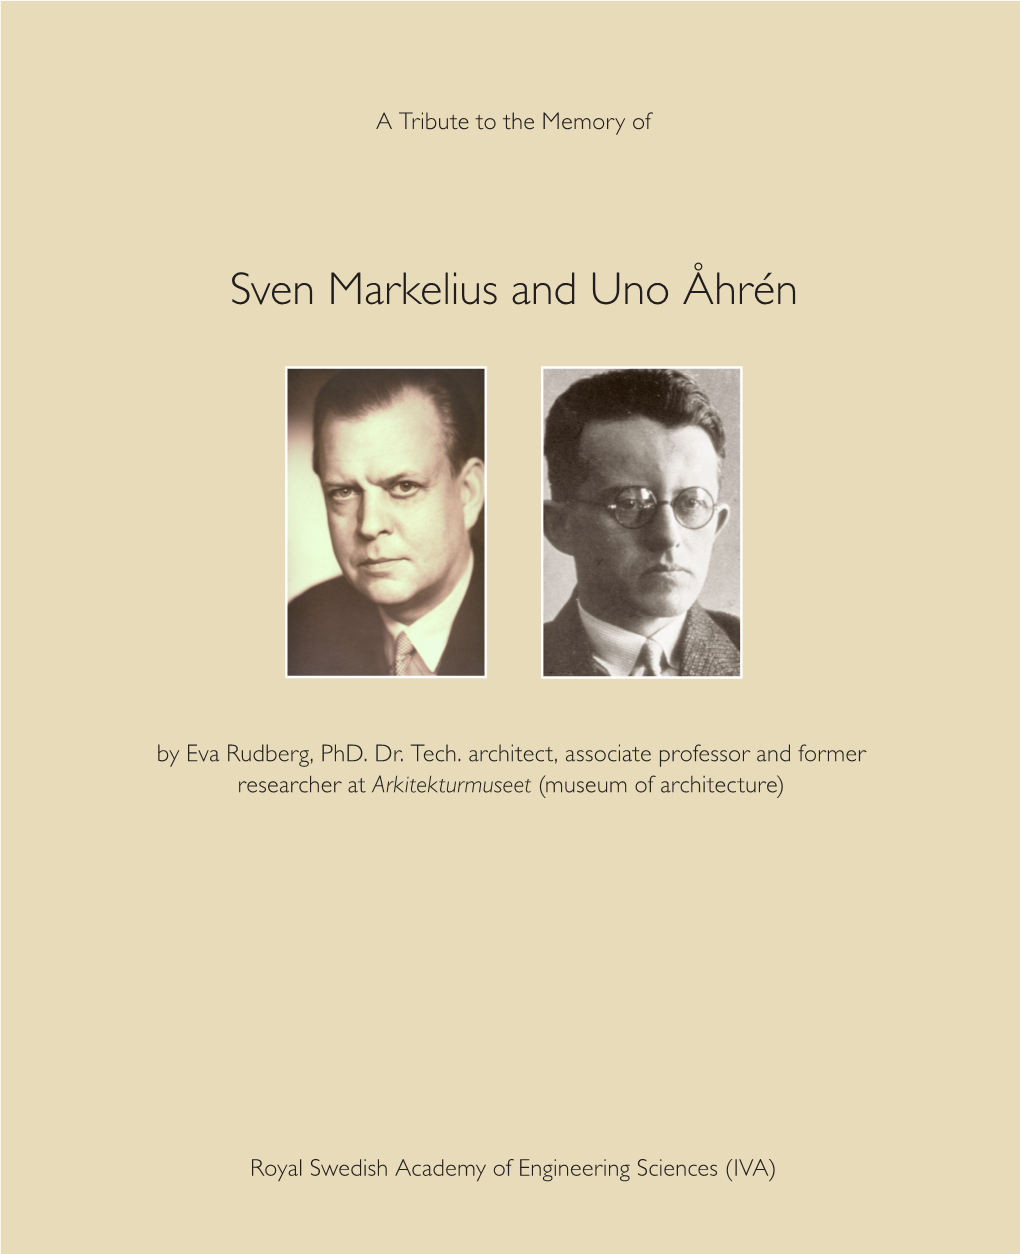 Sven Markelius and Uno Åhrén